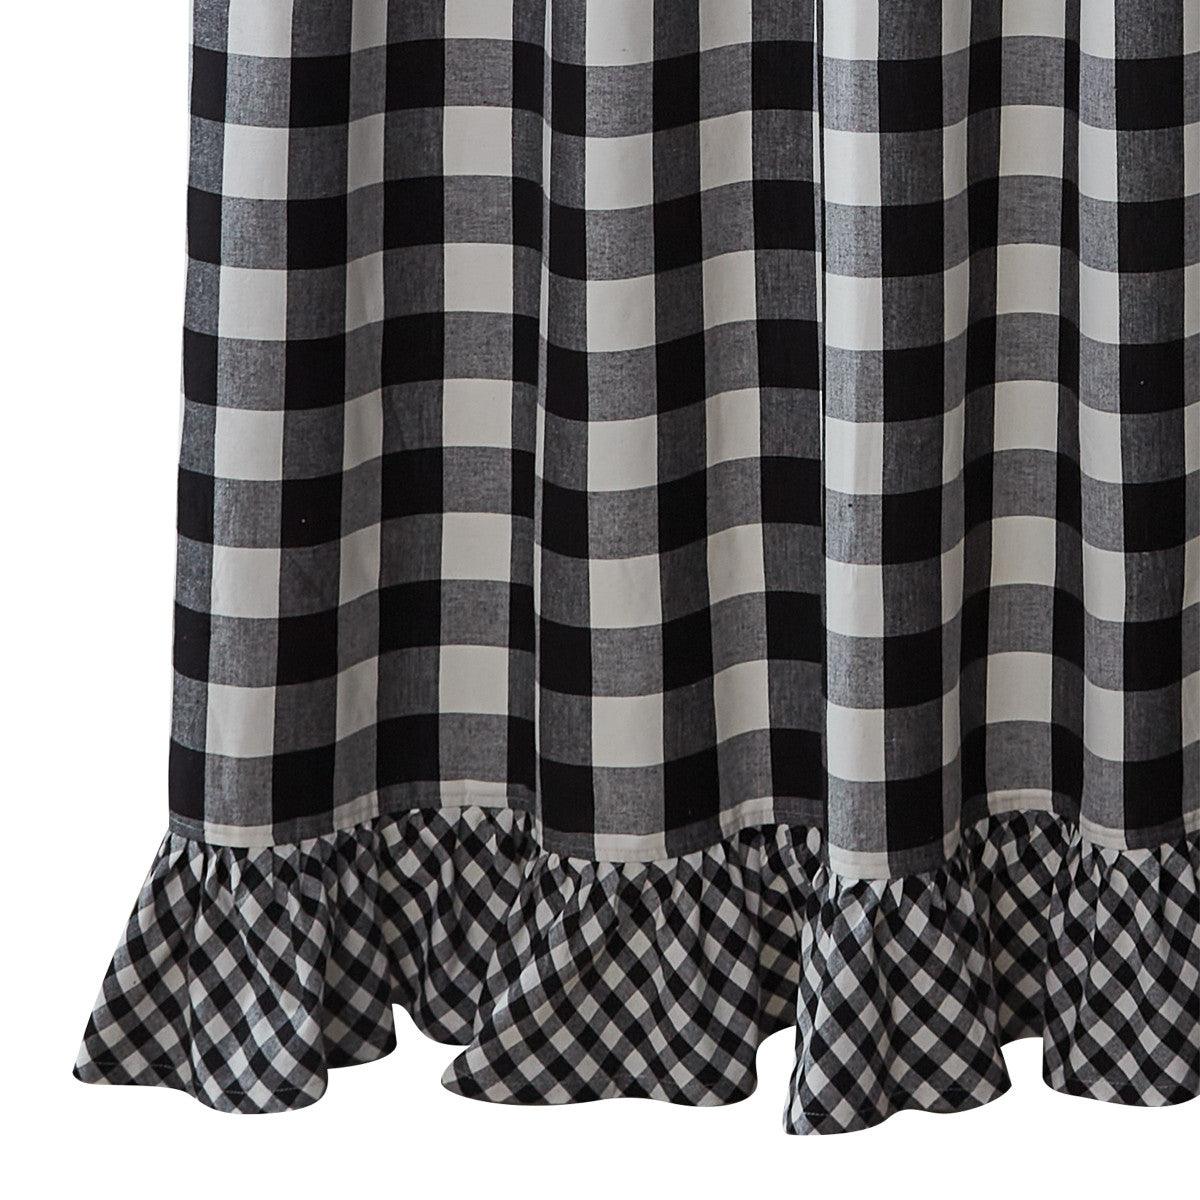 Wicklow Ruffled Shower Curtain - Black & Cream Park Designs - The Fox Decor